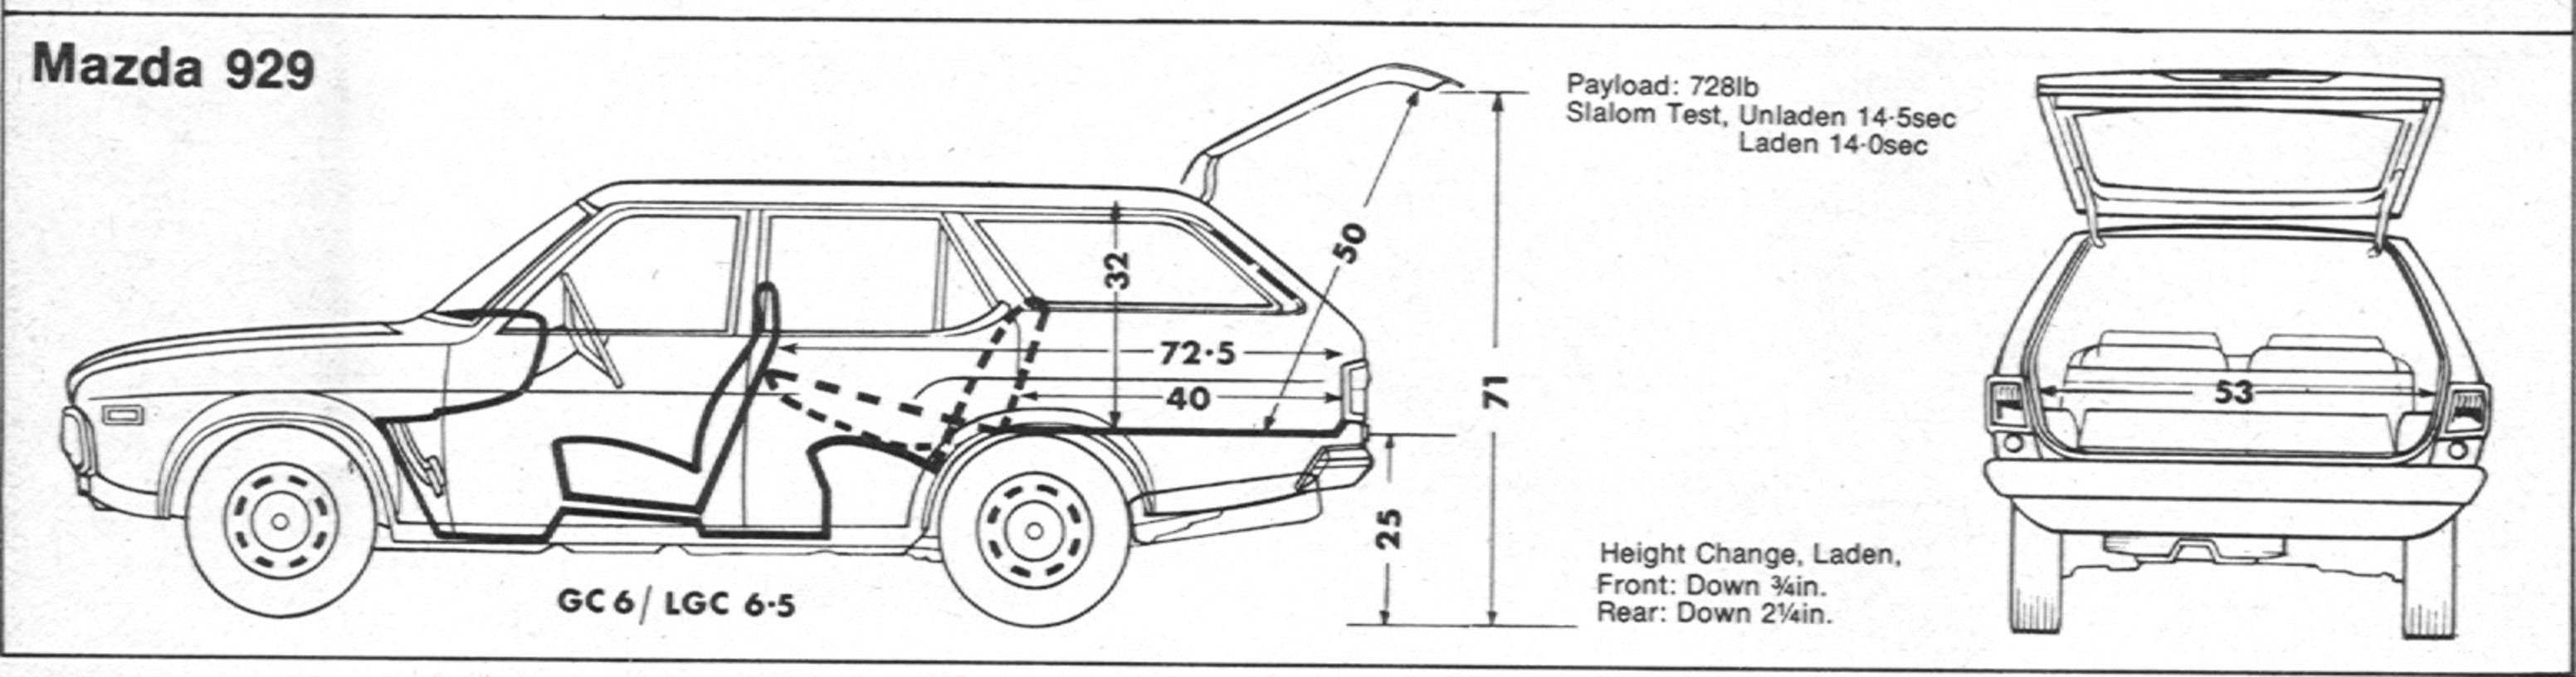 Mazda 929 Wagon (1975) side-rear views-mazda-929-wagon